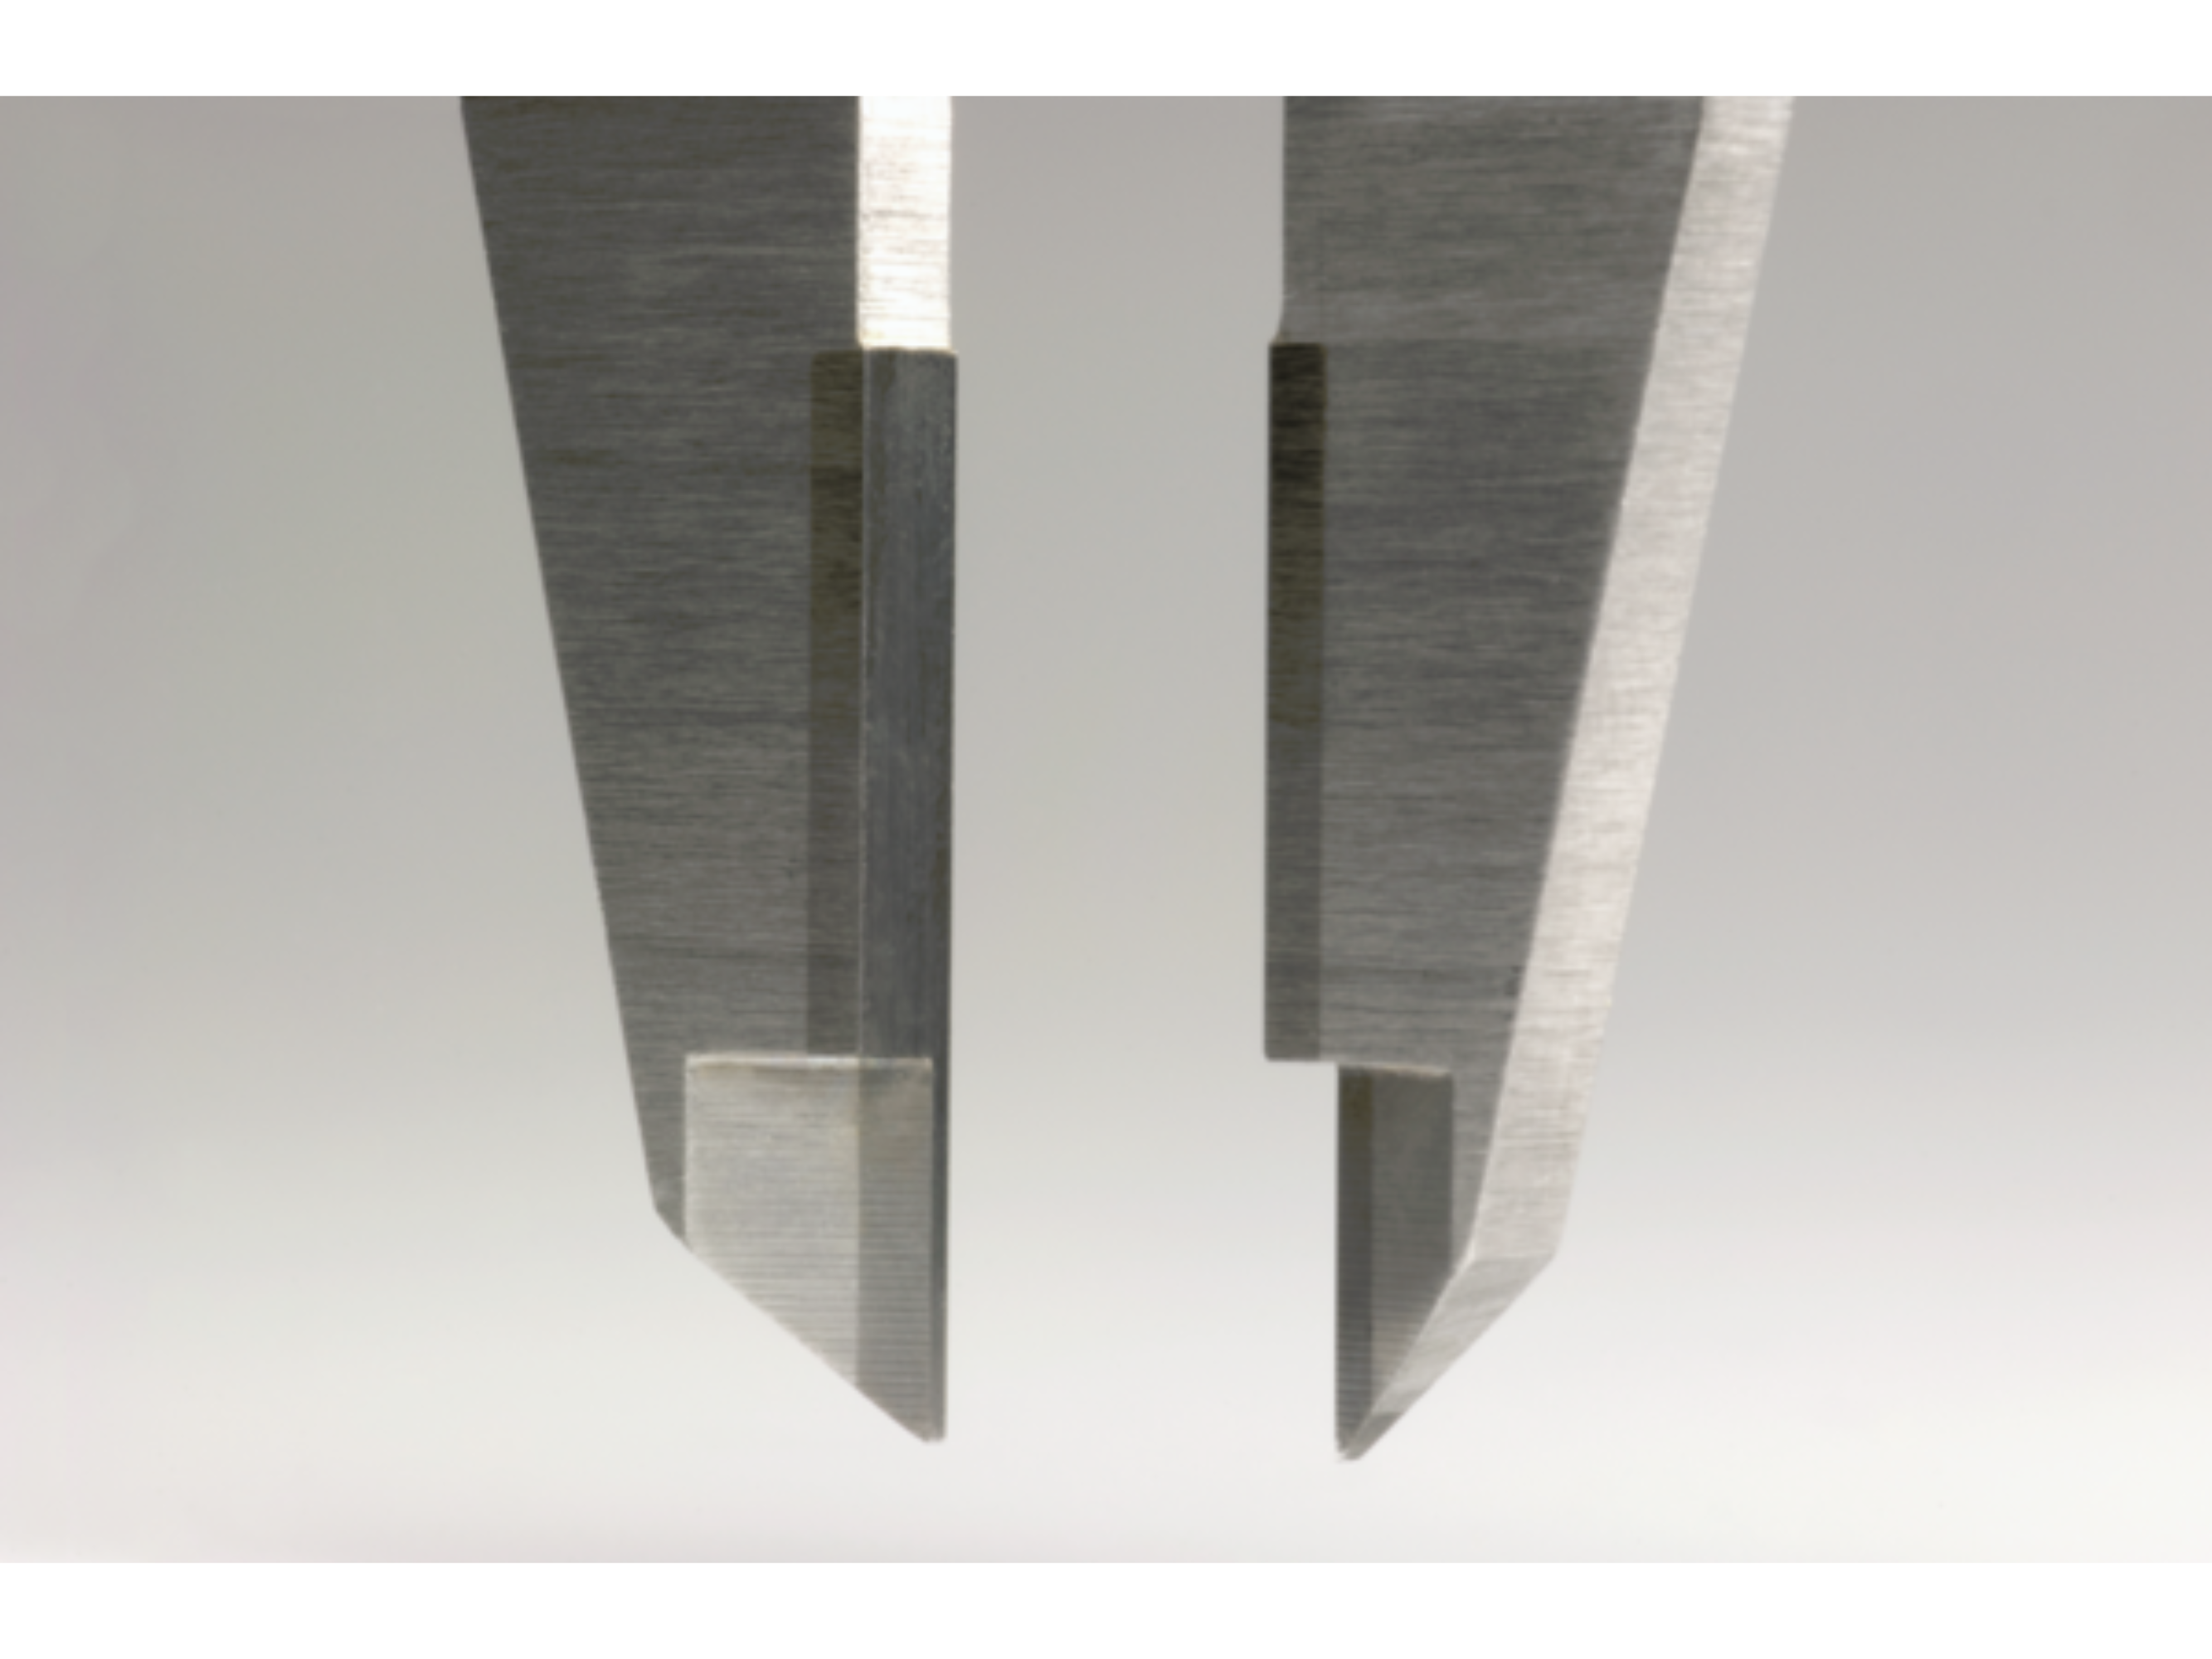 ABSOLUTE AOS Carbide Caliper 0-150mm Square Depth Rod & Thumb Roller 500-174-30